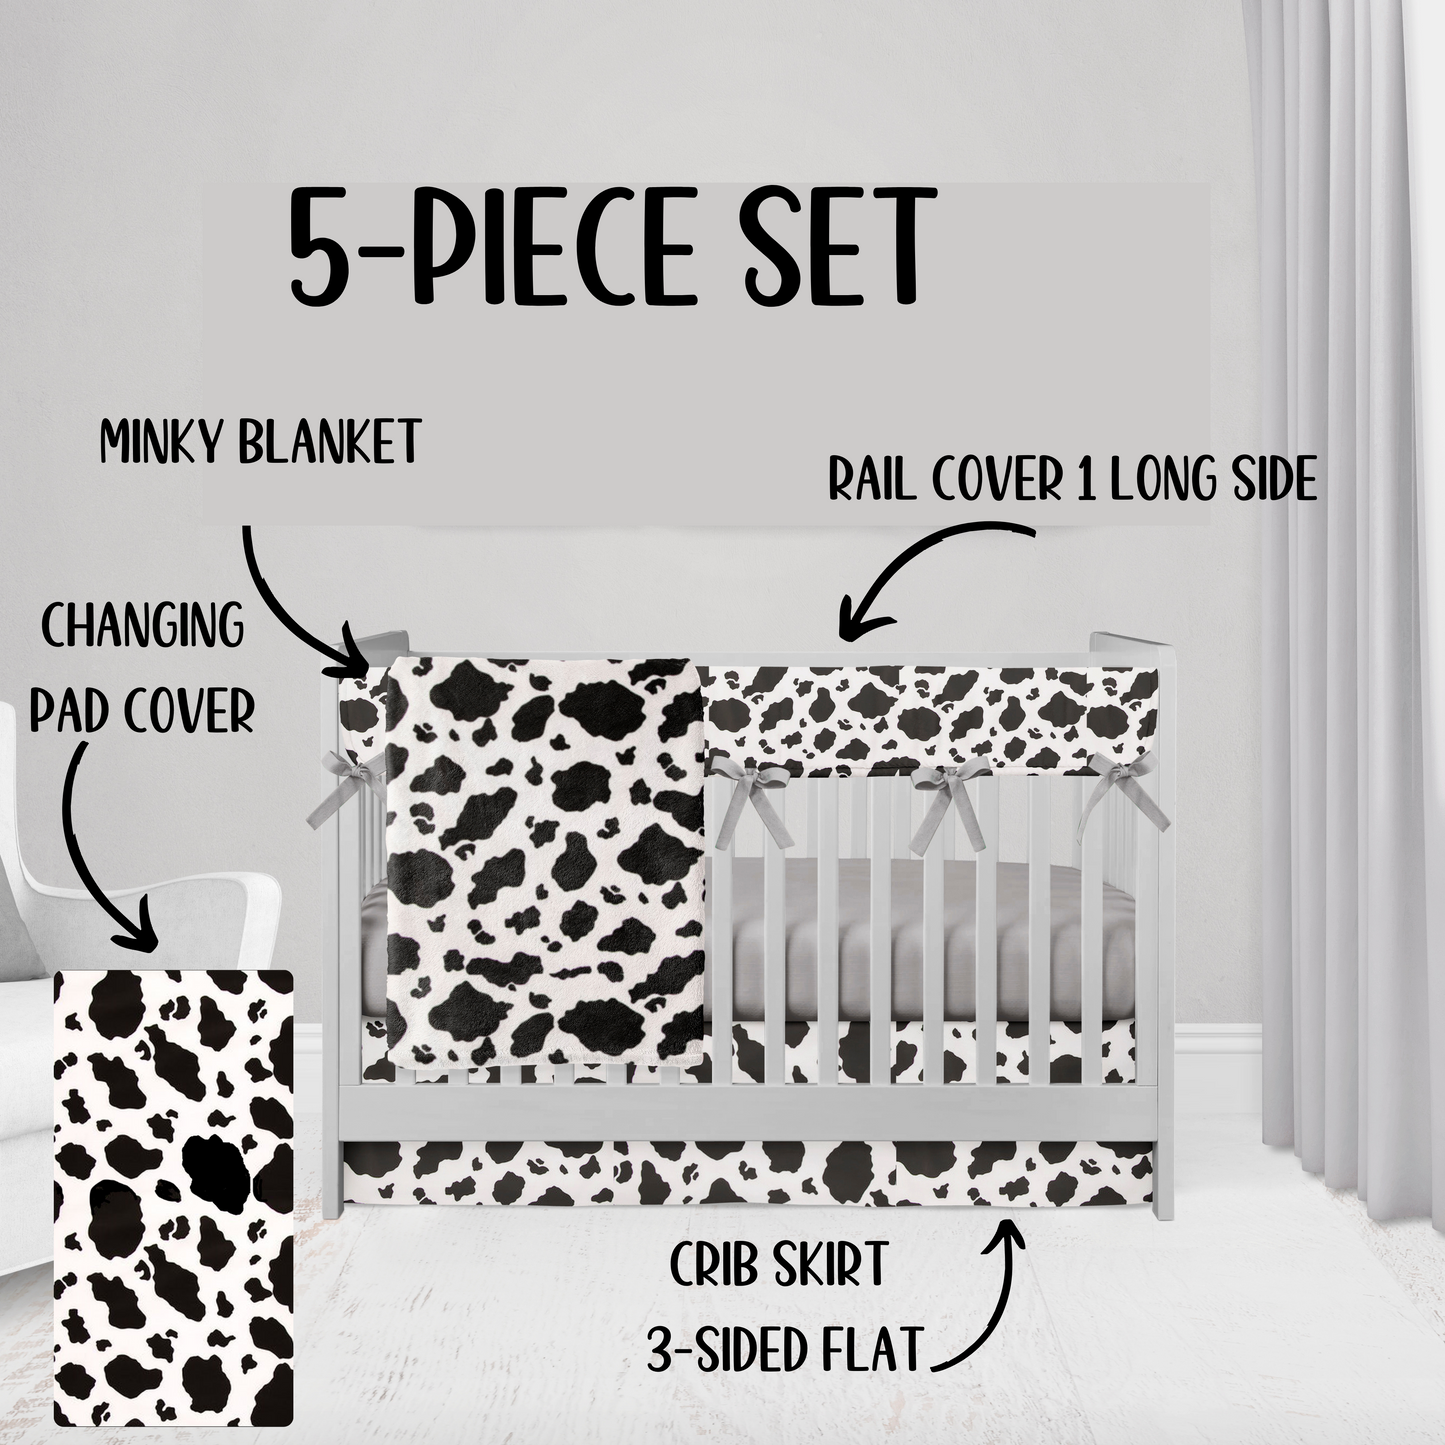 5-piece set cow crib bedding